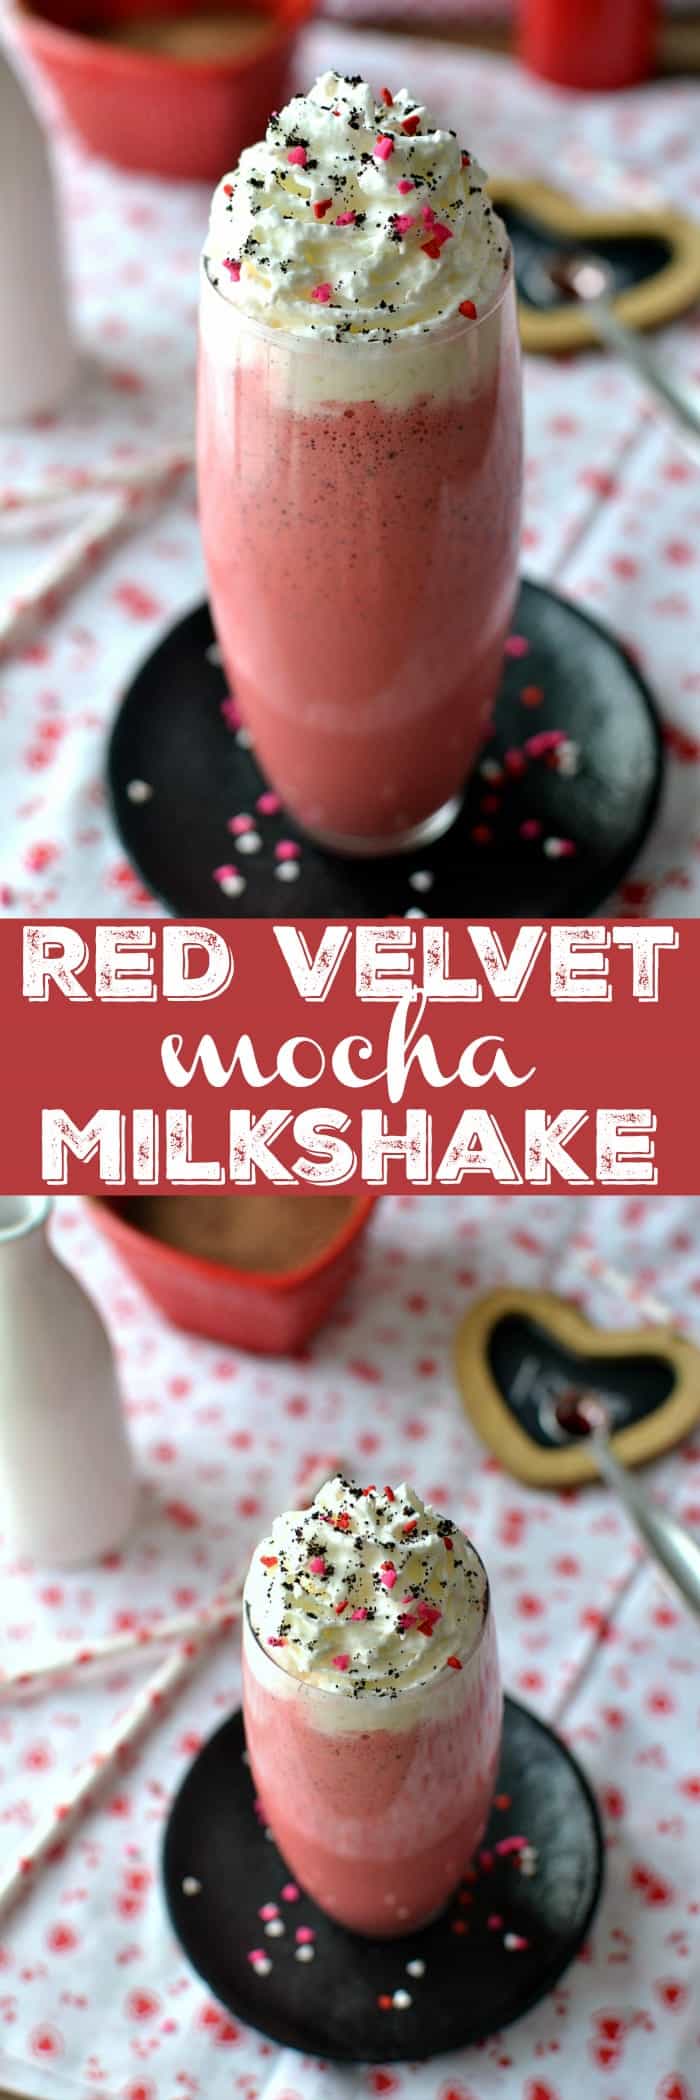 Red Velvet Mocha Milkshake is not your average shake! This dessert milkshake is complete with a touch of cream cheese for that perfect red velvet flavor.